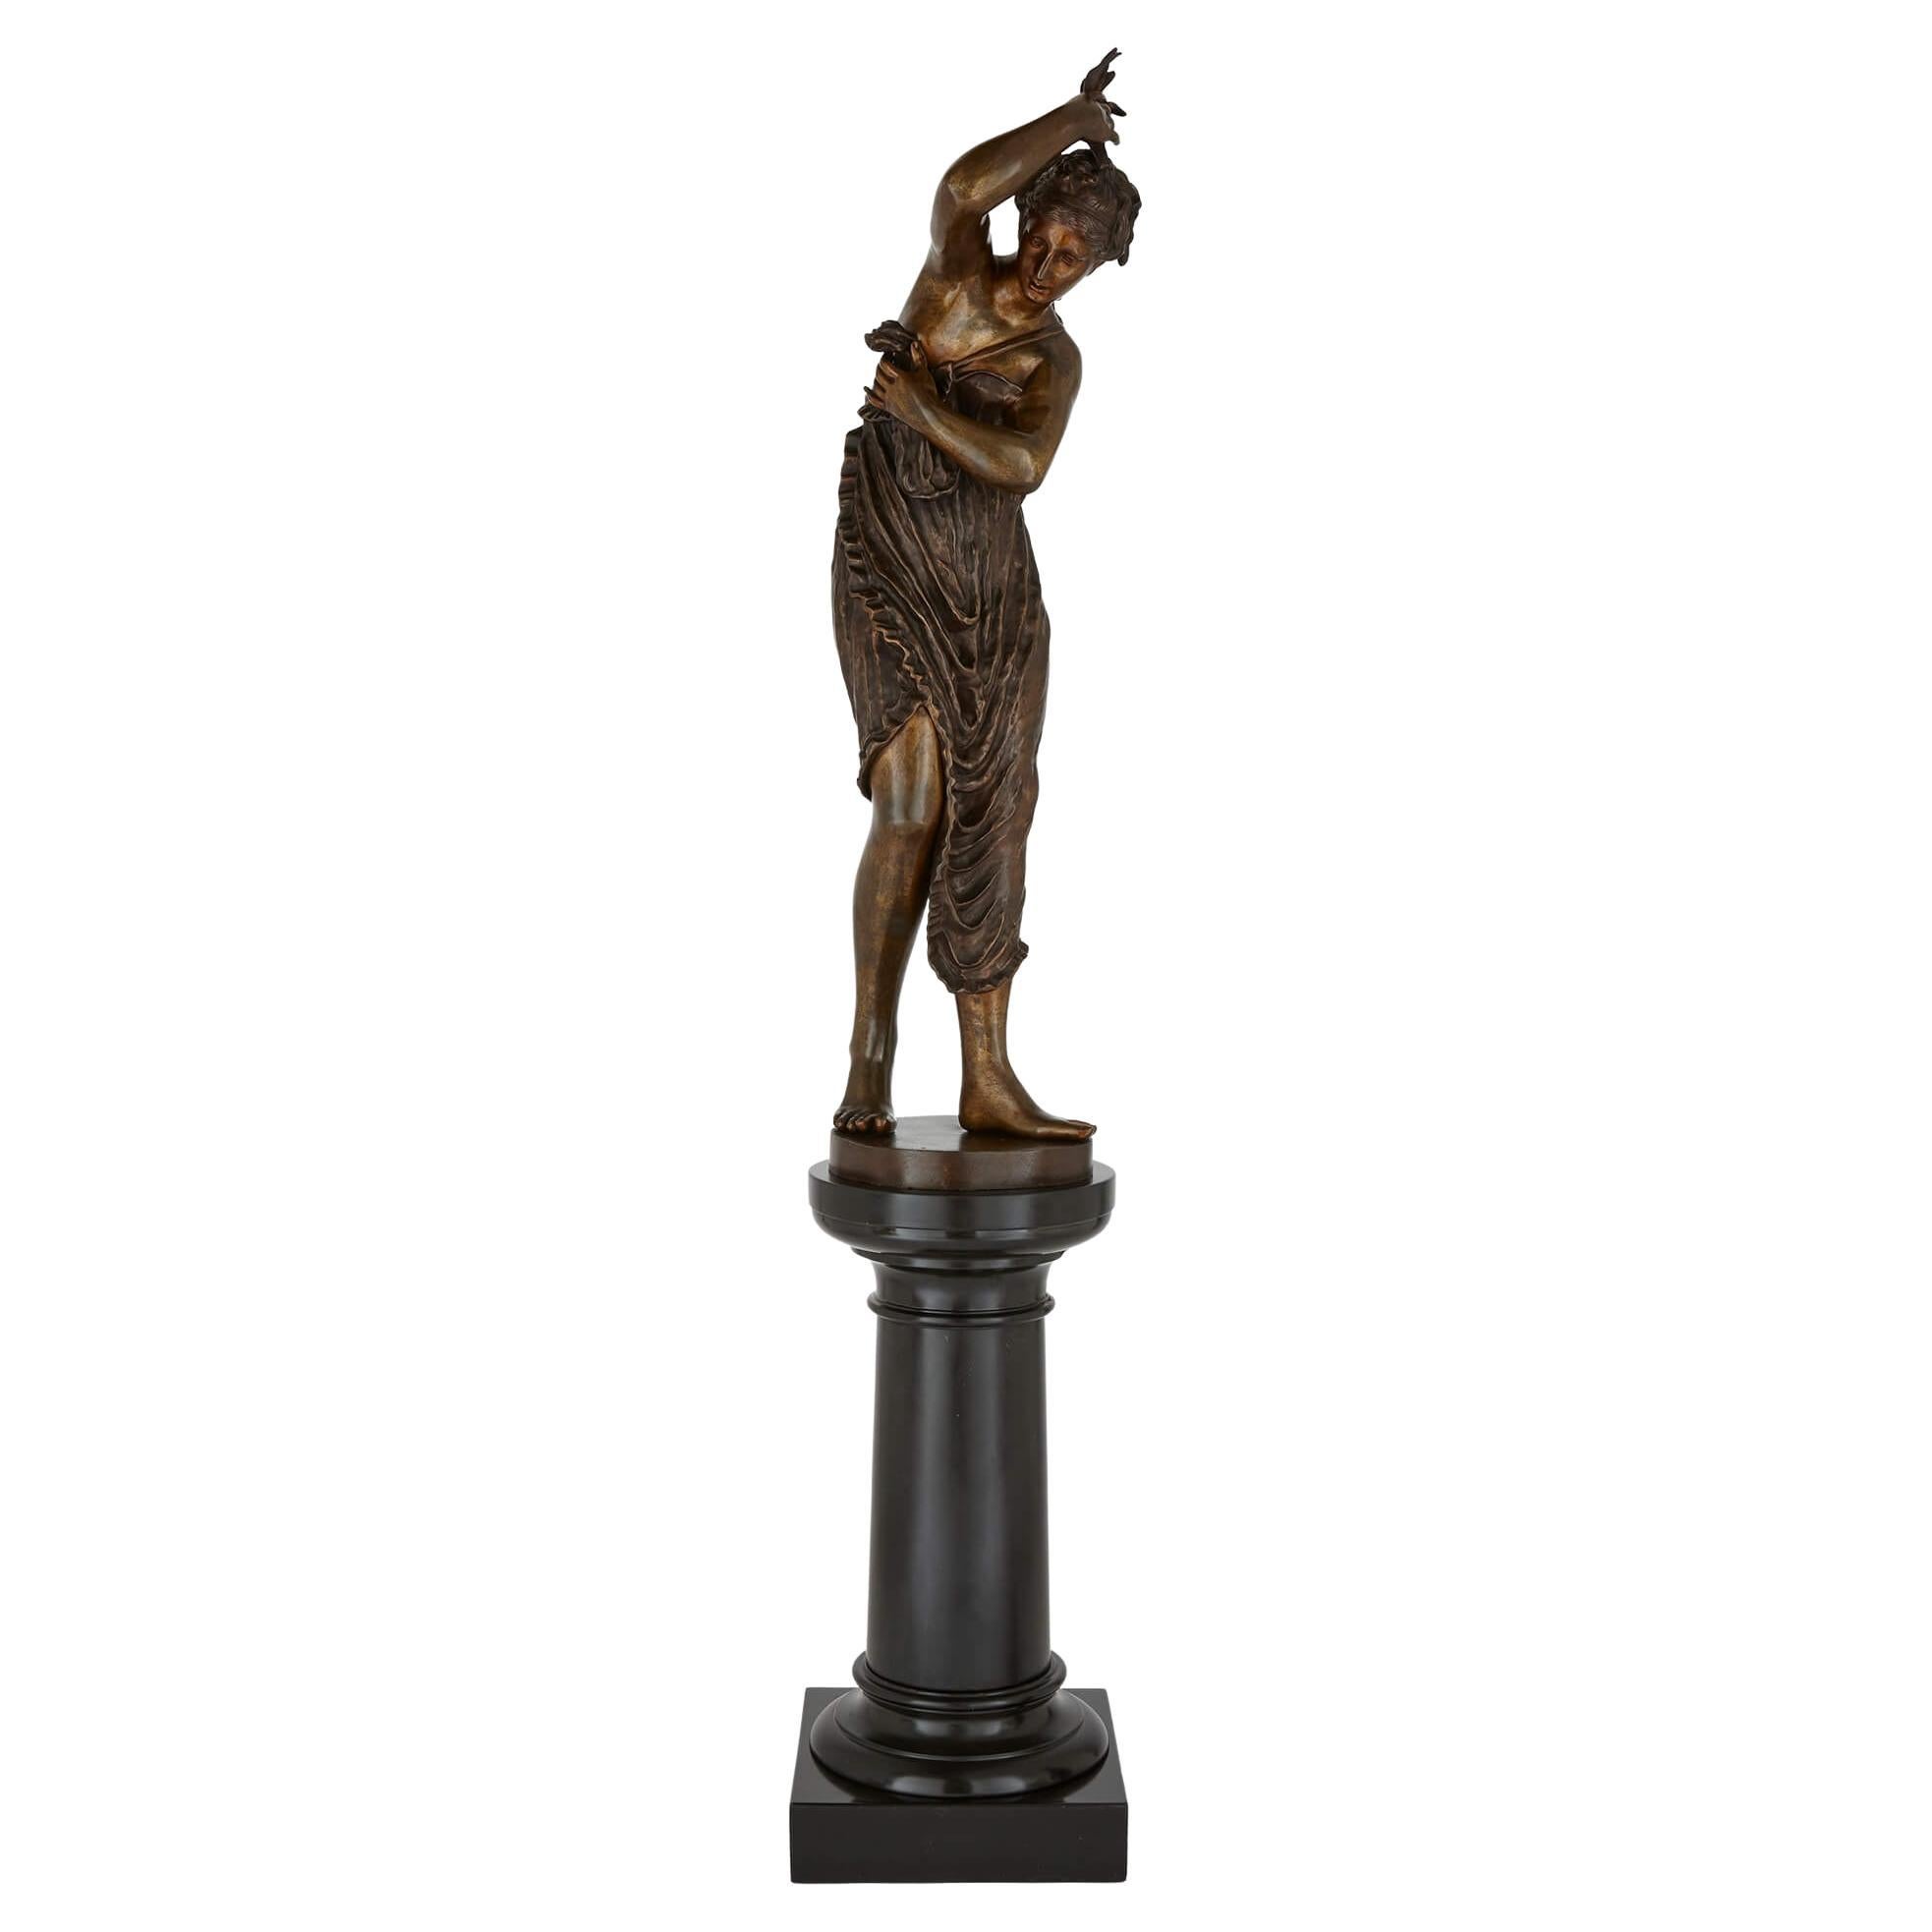 Grande figurine d'Ondine en bronze patiné